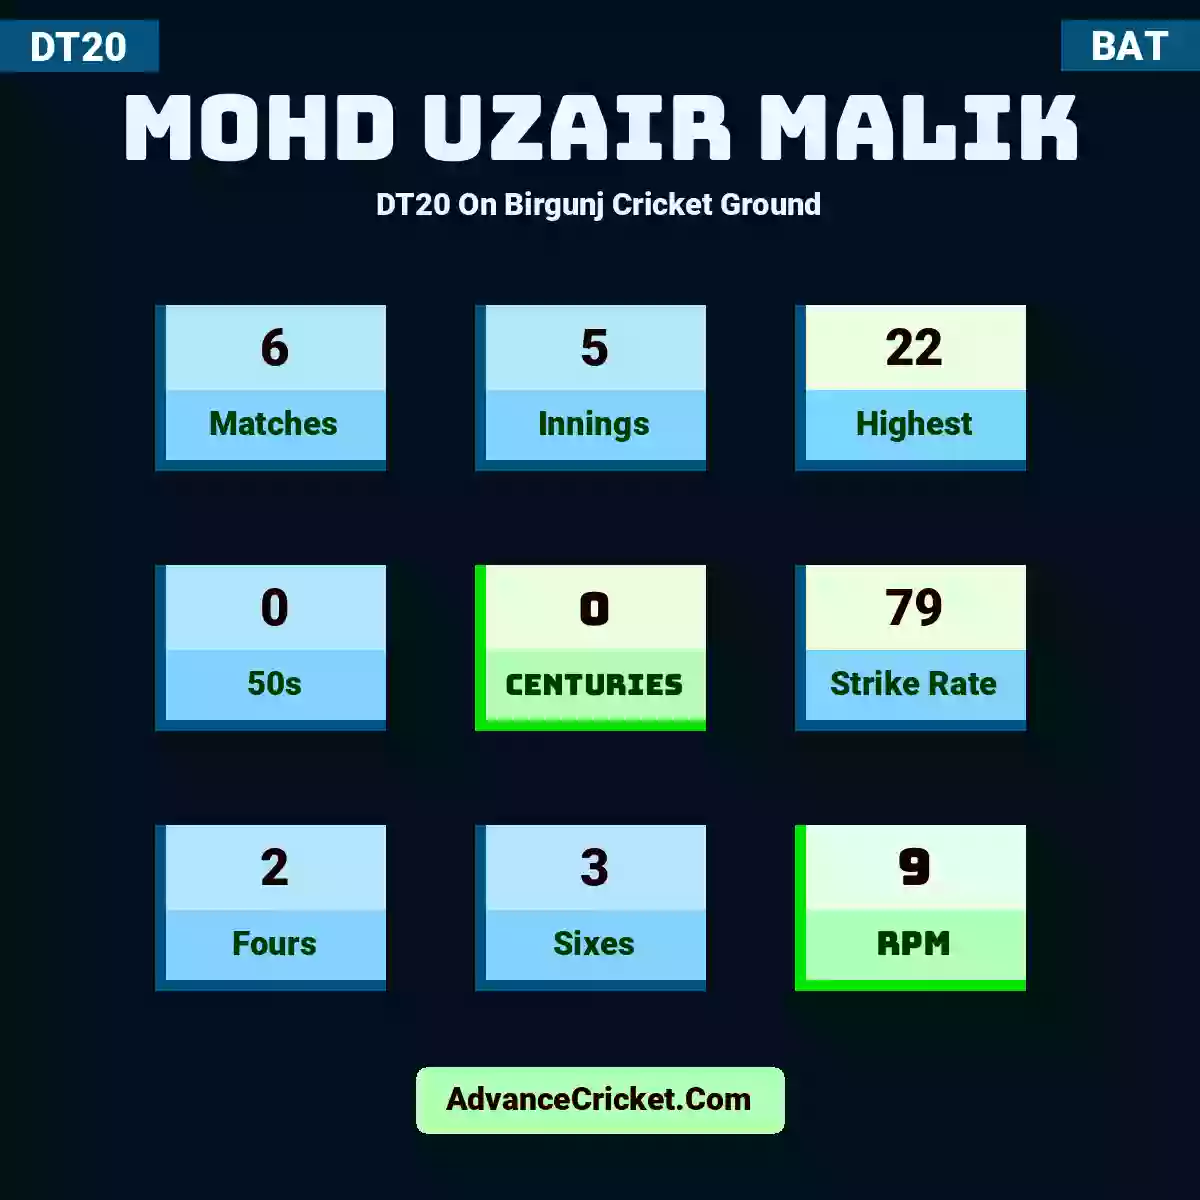 Mohd Uzair Malik DT20  On Birgunj Cricket Ground, Mohd Uzair Malik played 6 matches, scored 22 runs as highest, 0 half-centuries, and 0 centuries, with a strike rate of 79. M.Uzair.Malik hit 2 fours and 3 sixes, with an RPM of 9.